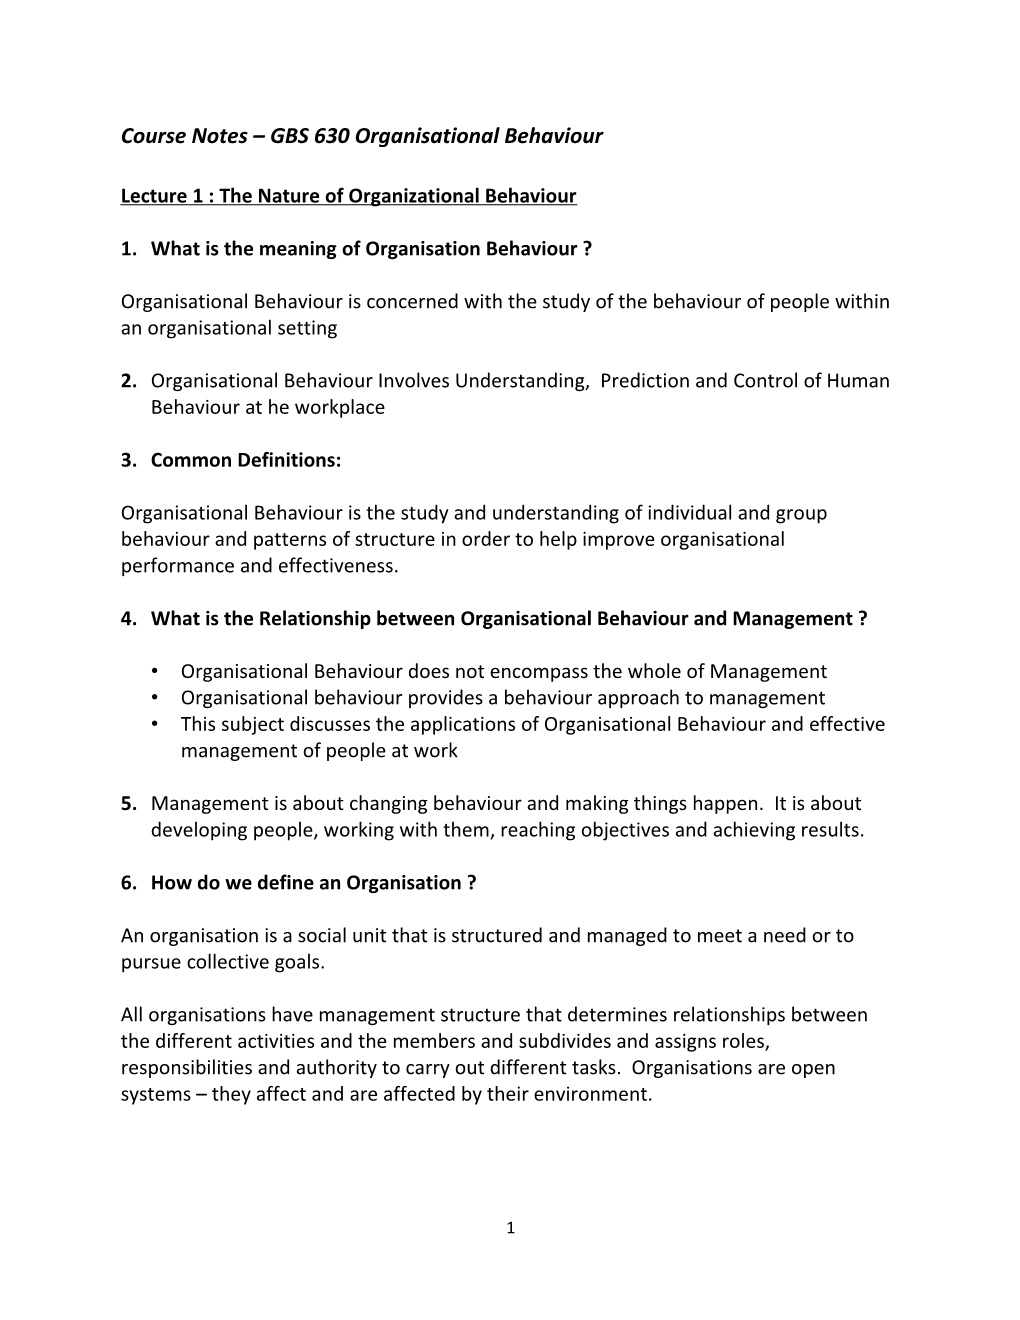 Course Notes GBS 630 Organisational Behaviour